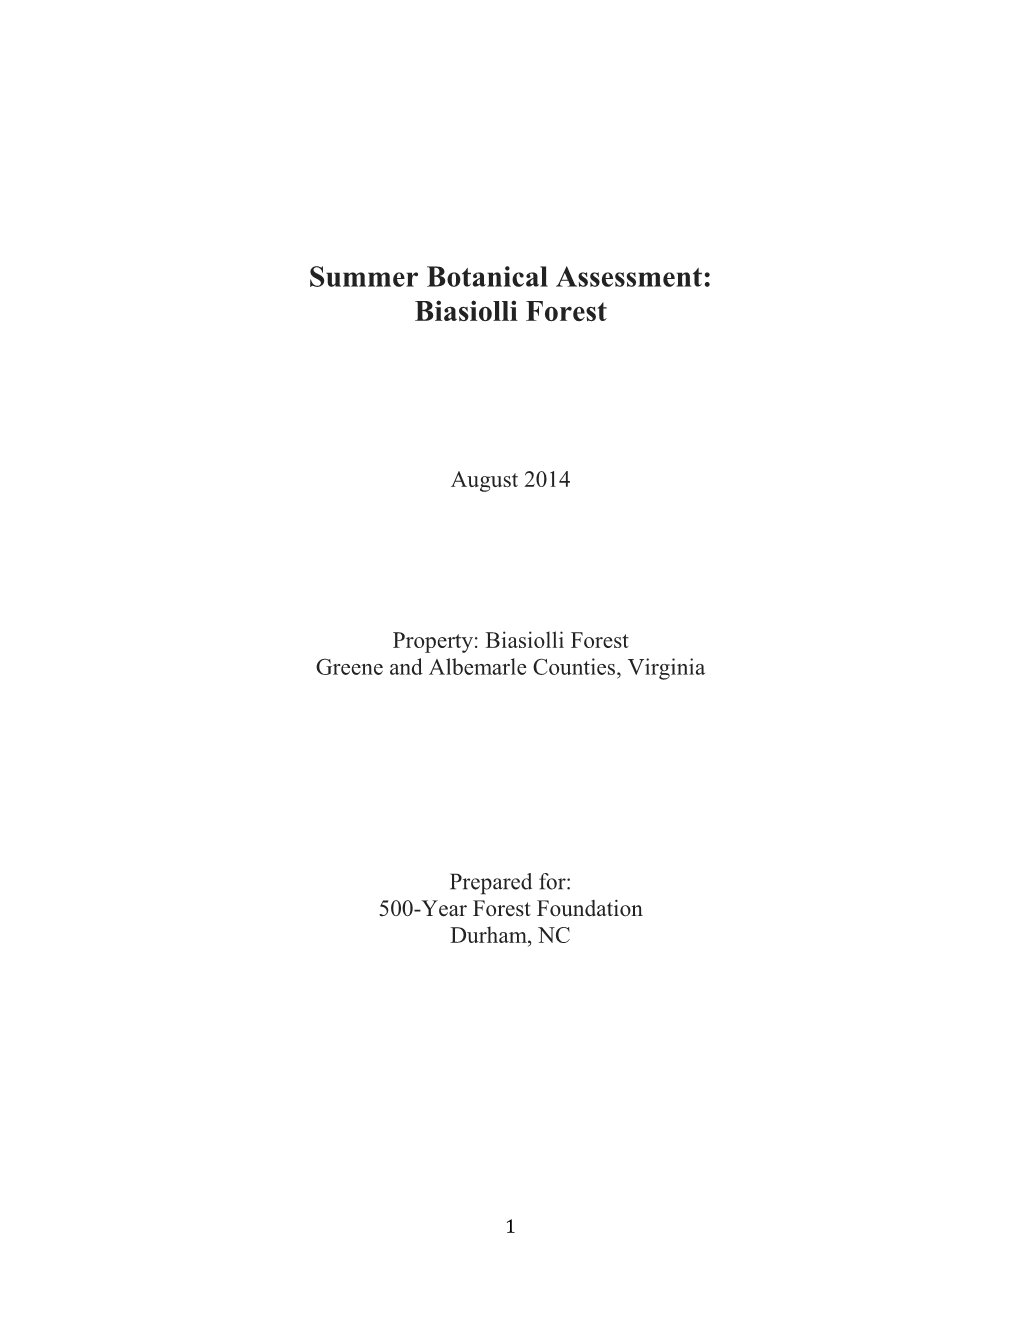 Botanical Assessment: Biasiolli Forest